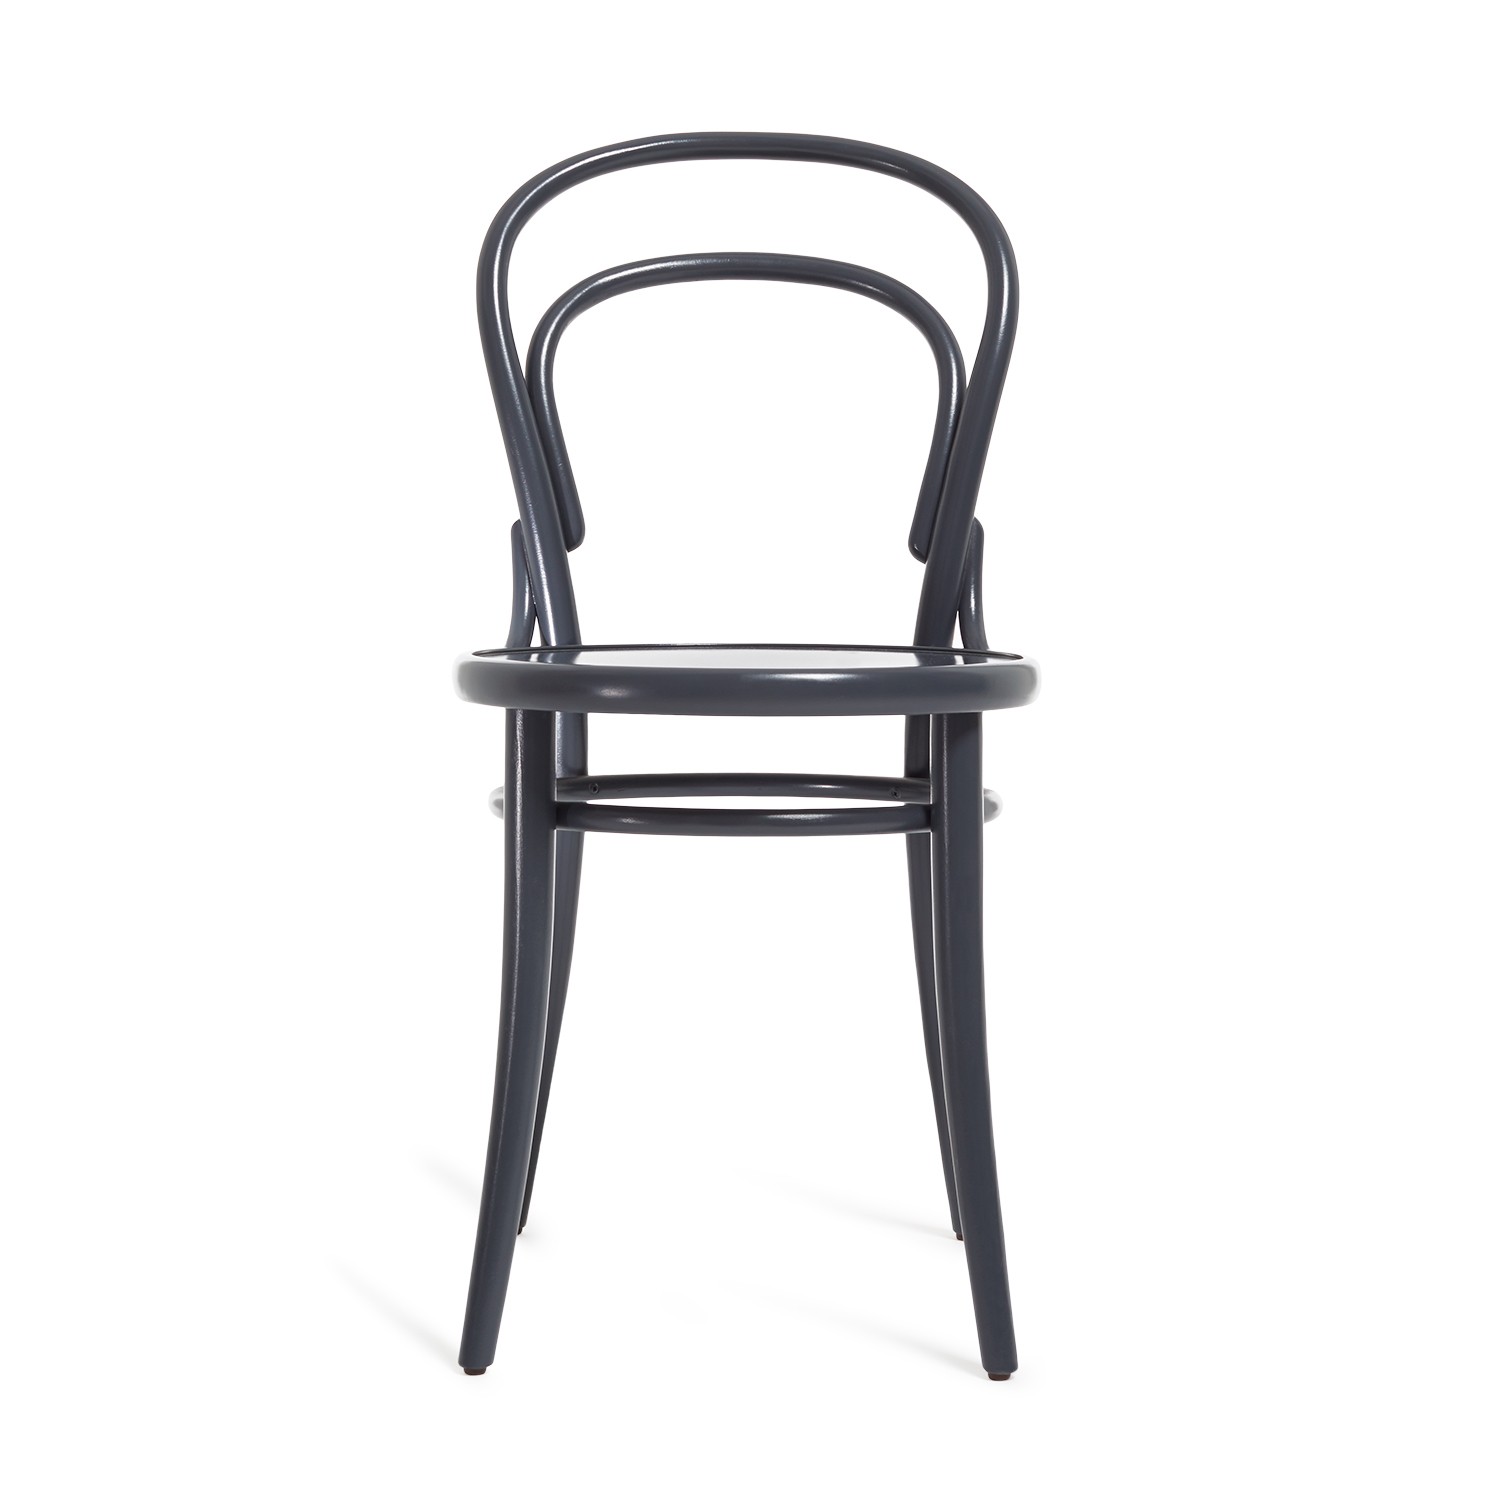 1298599-bent-bistro-chair-gray ...